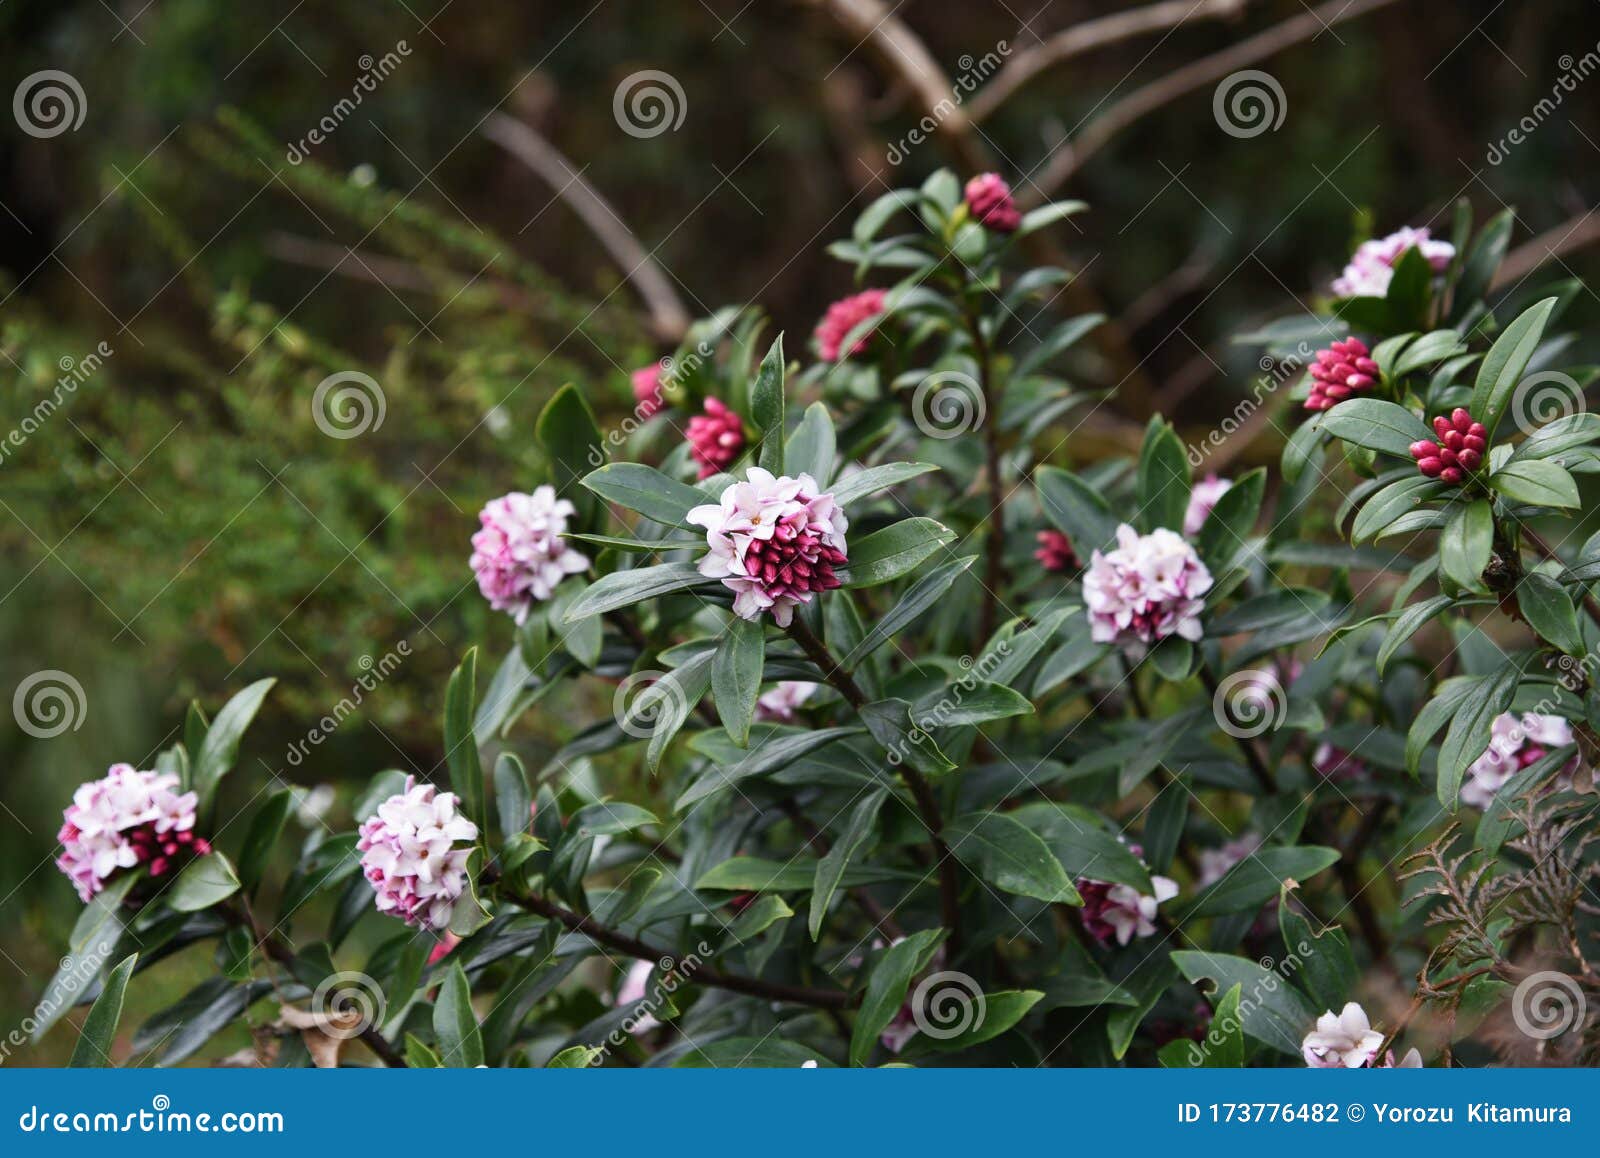 winter daphne flowers